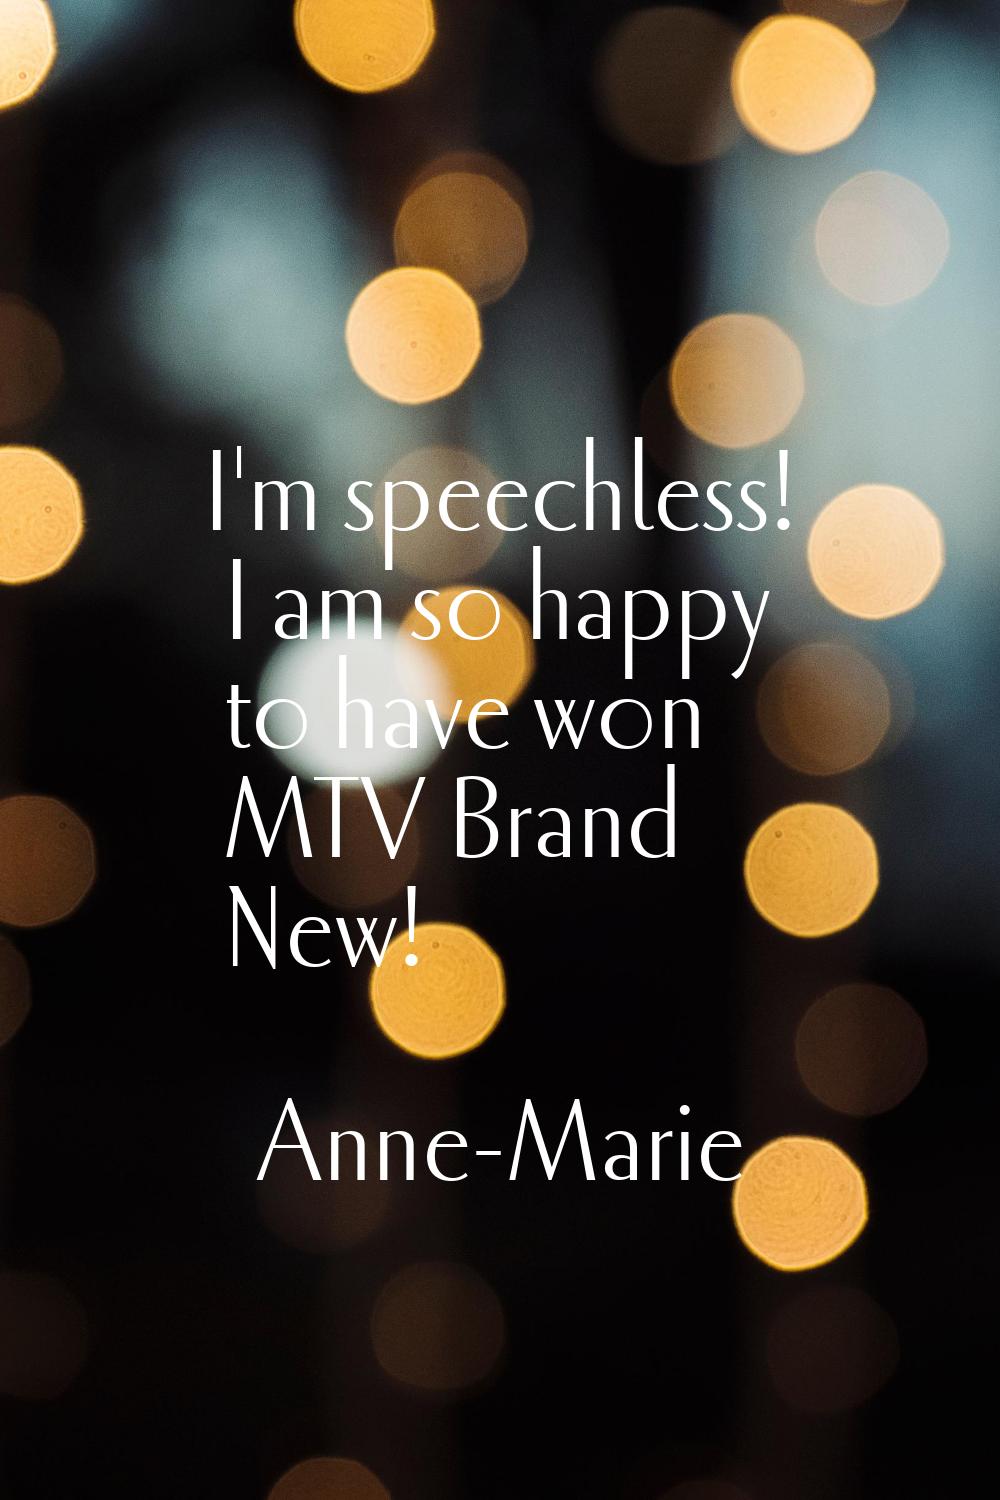 I'm speechless! I am so happy to have won MTV Brand New!